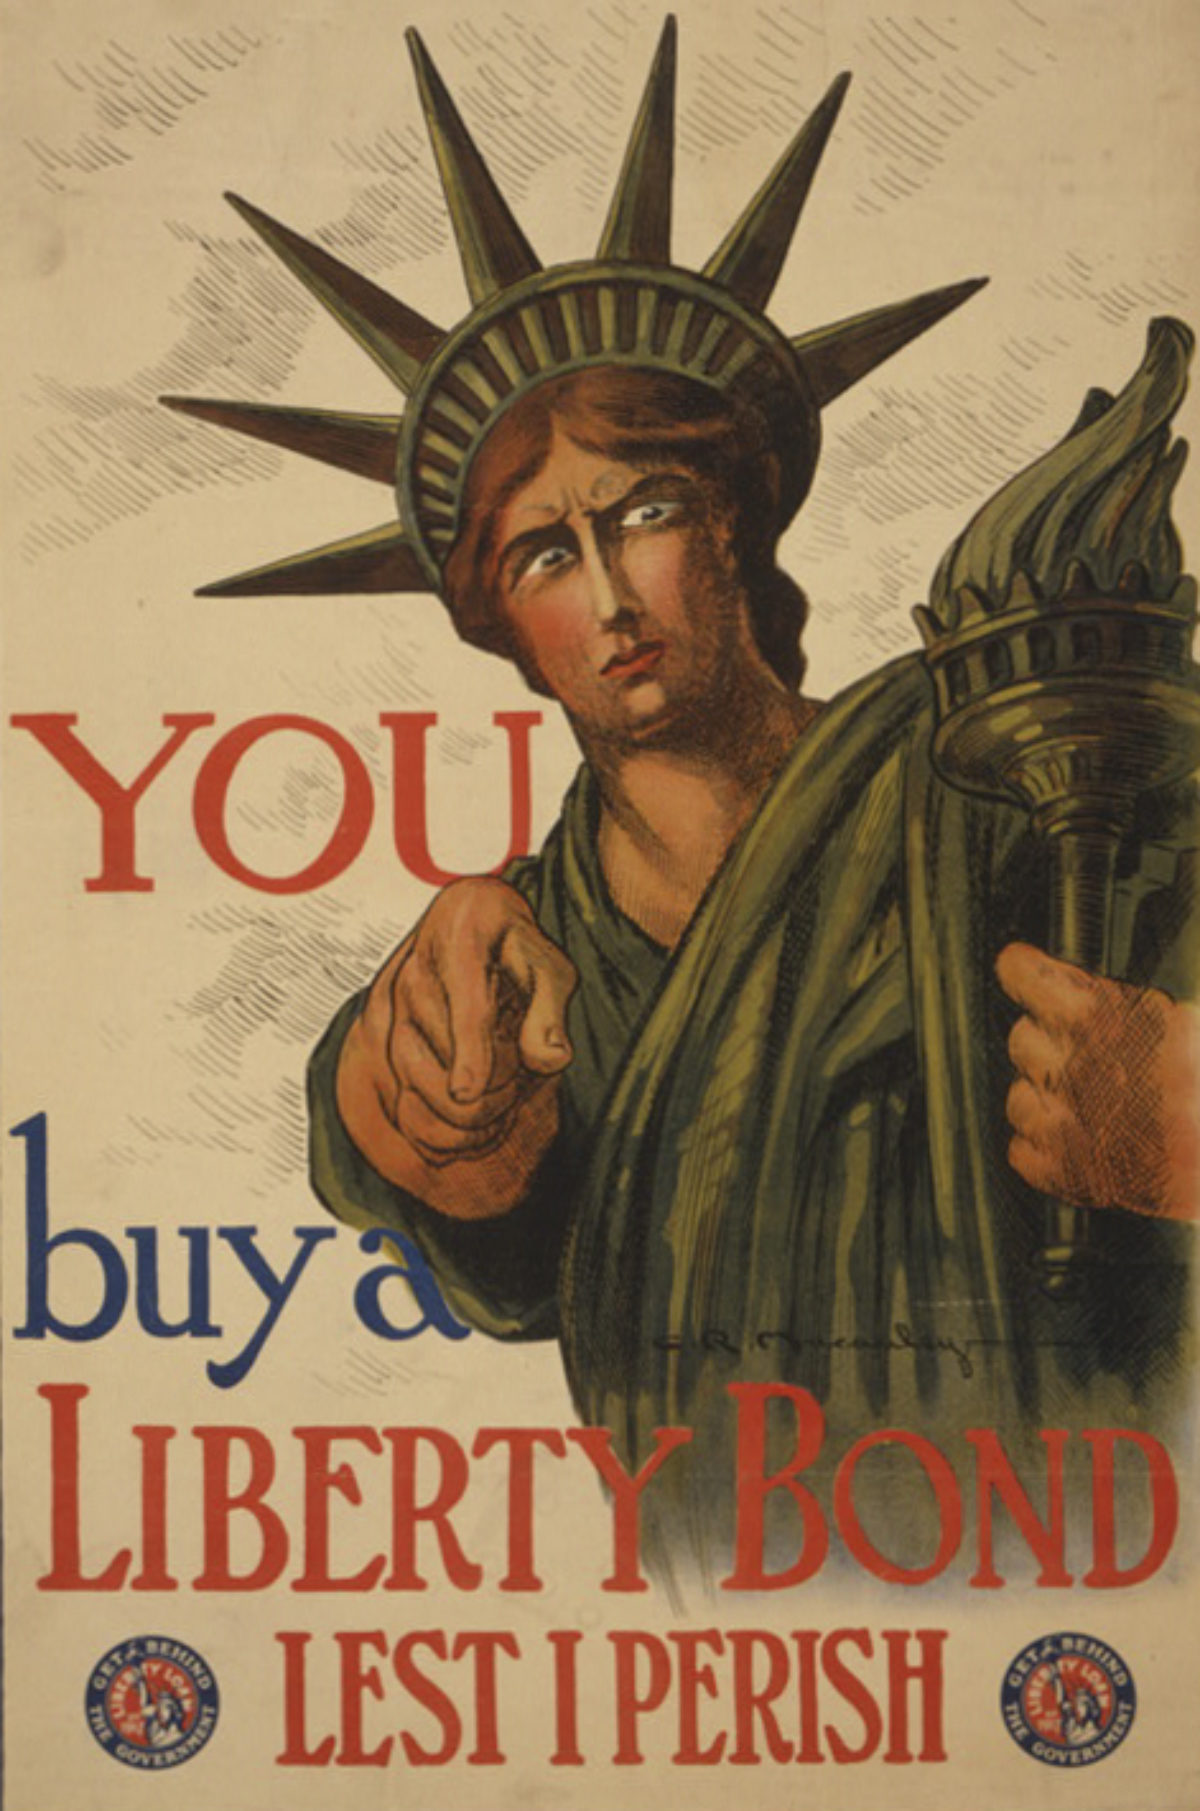 You-Buy-a-Liberty-bond-lest-I-perish